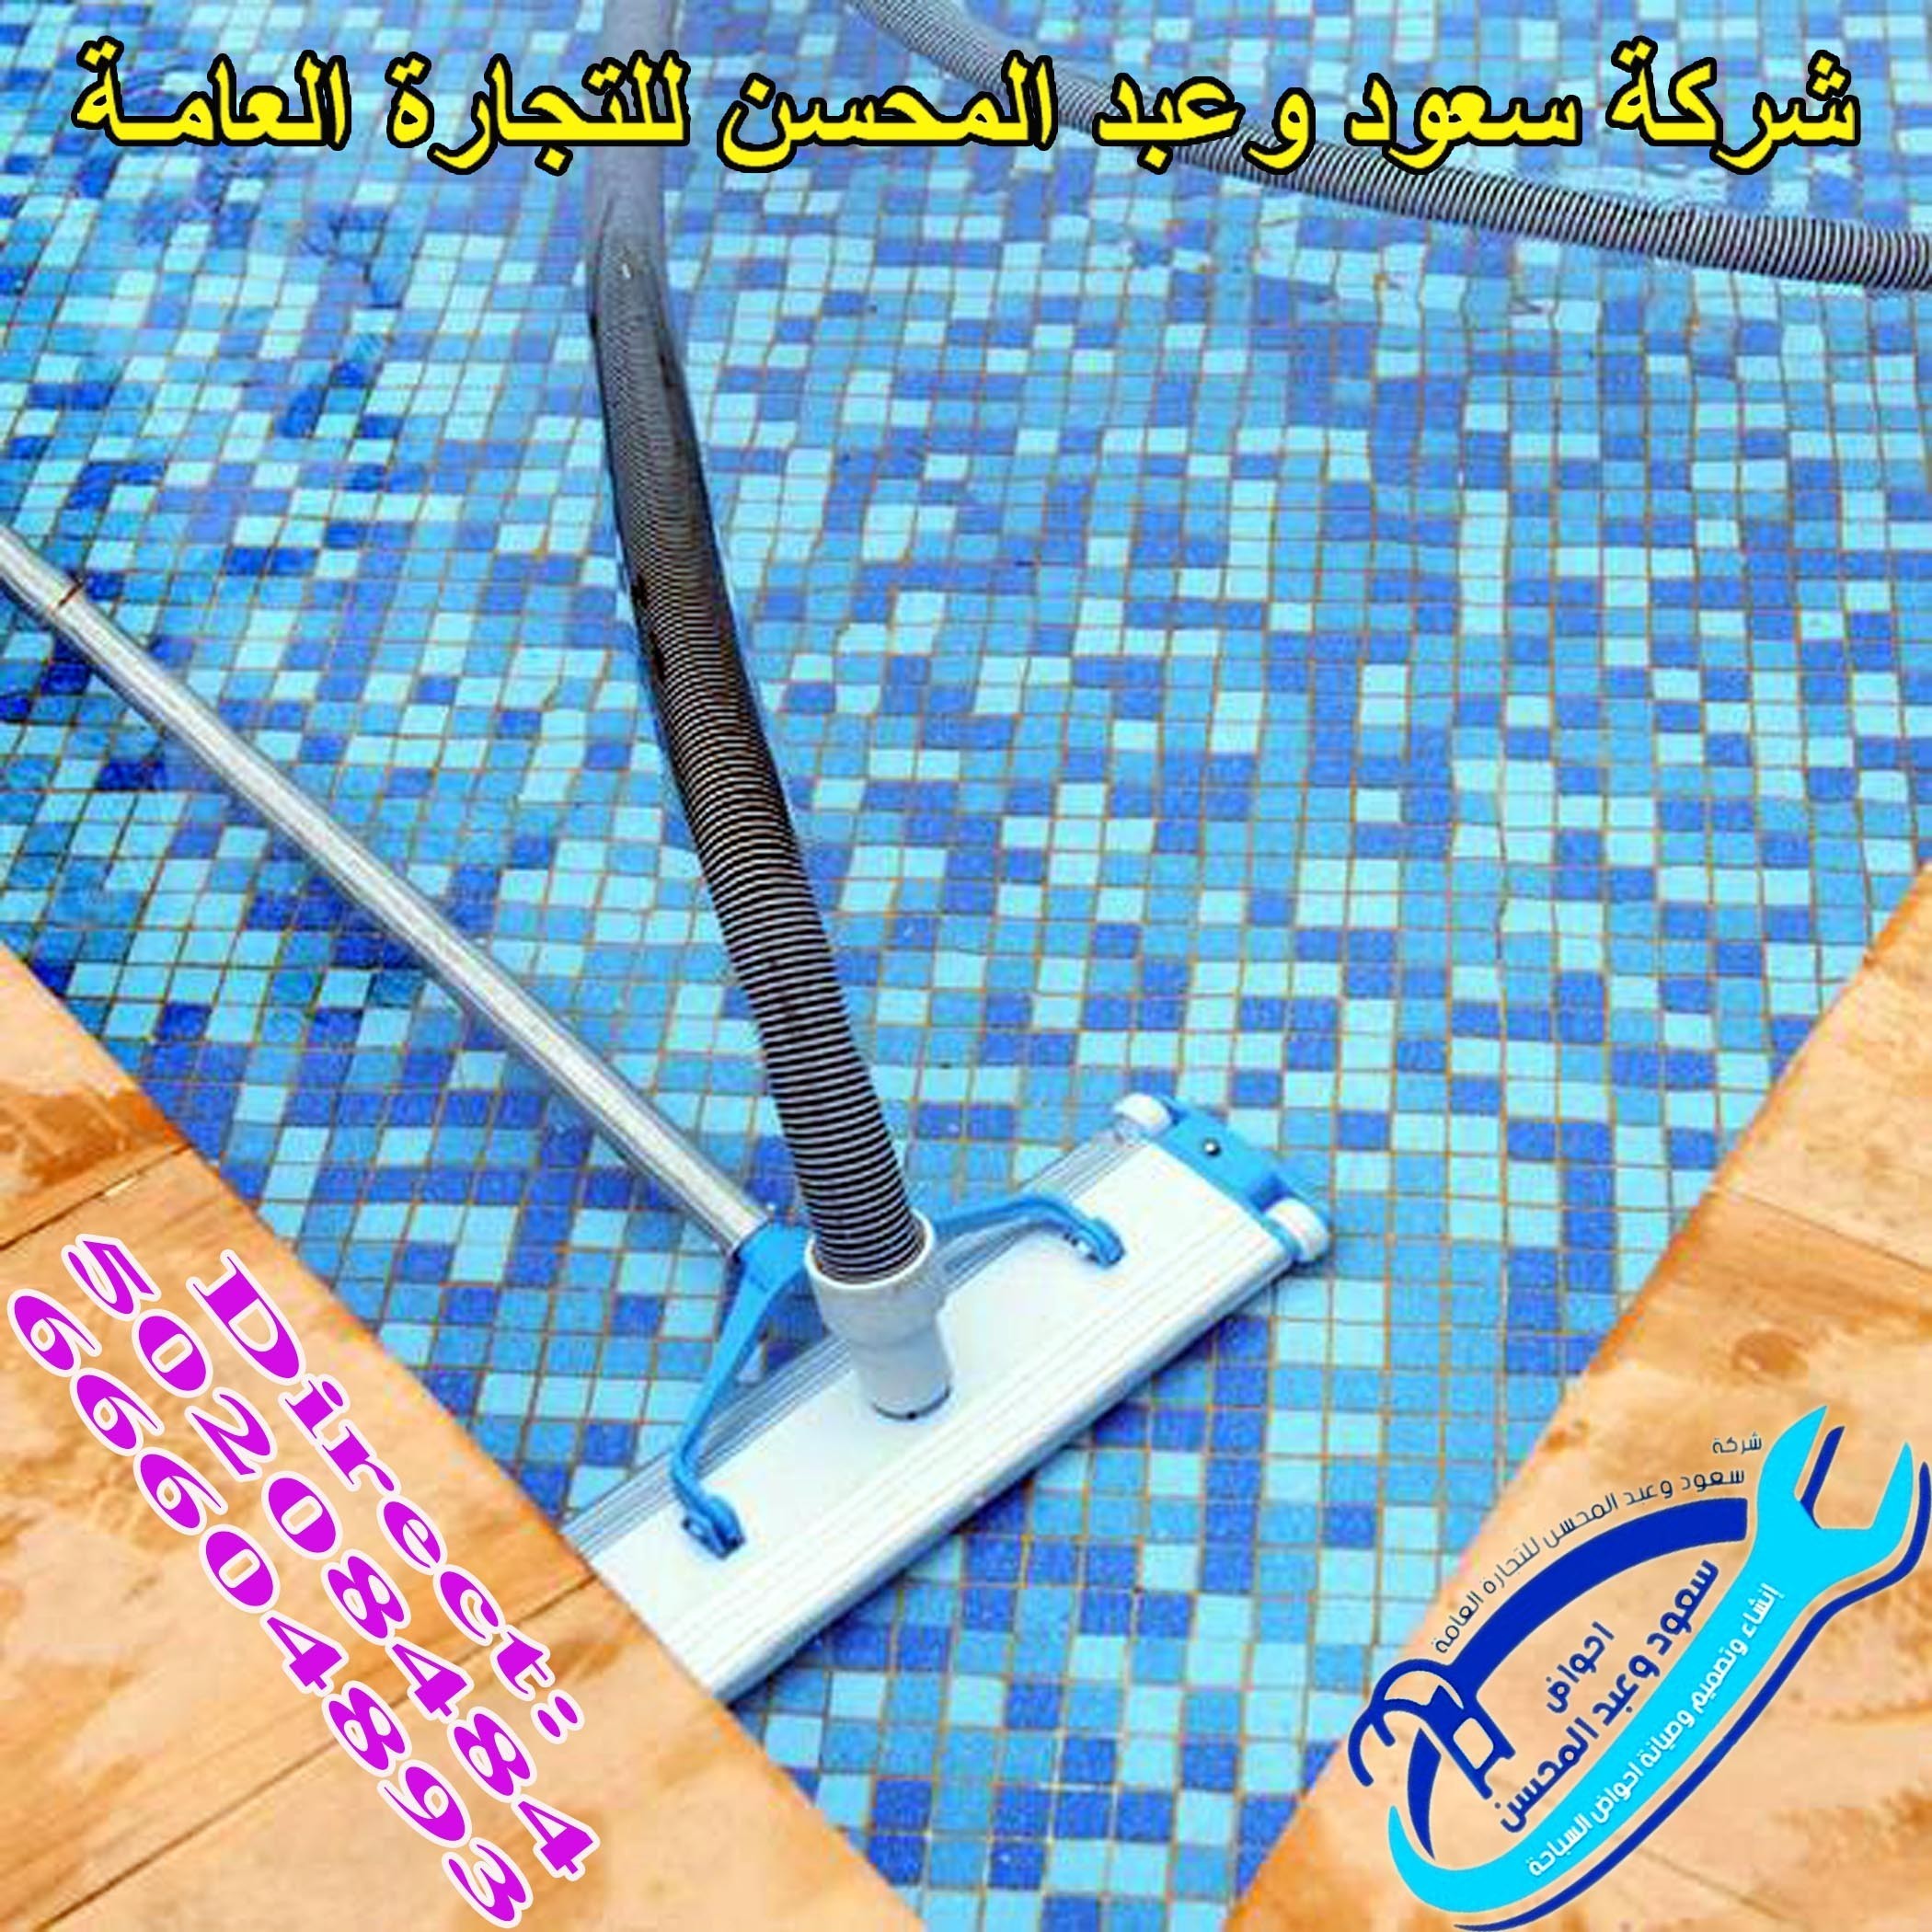 Swimming Pool Contractors Installation & Maintenance in Kuwait